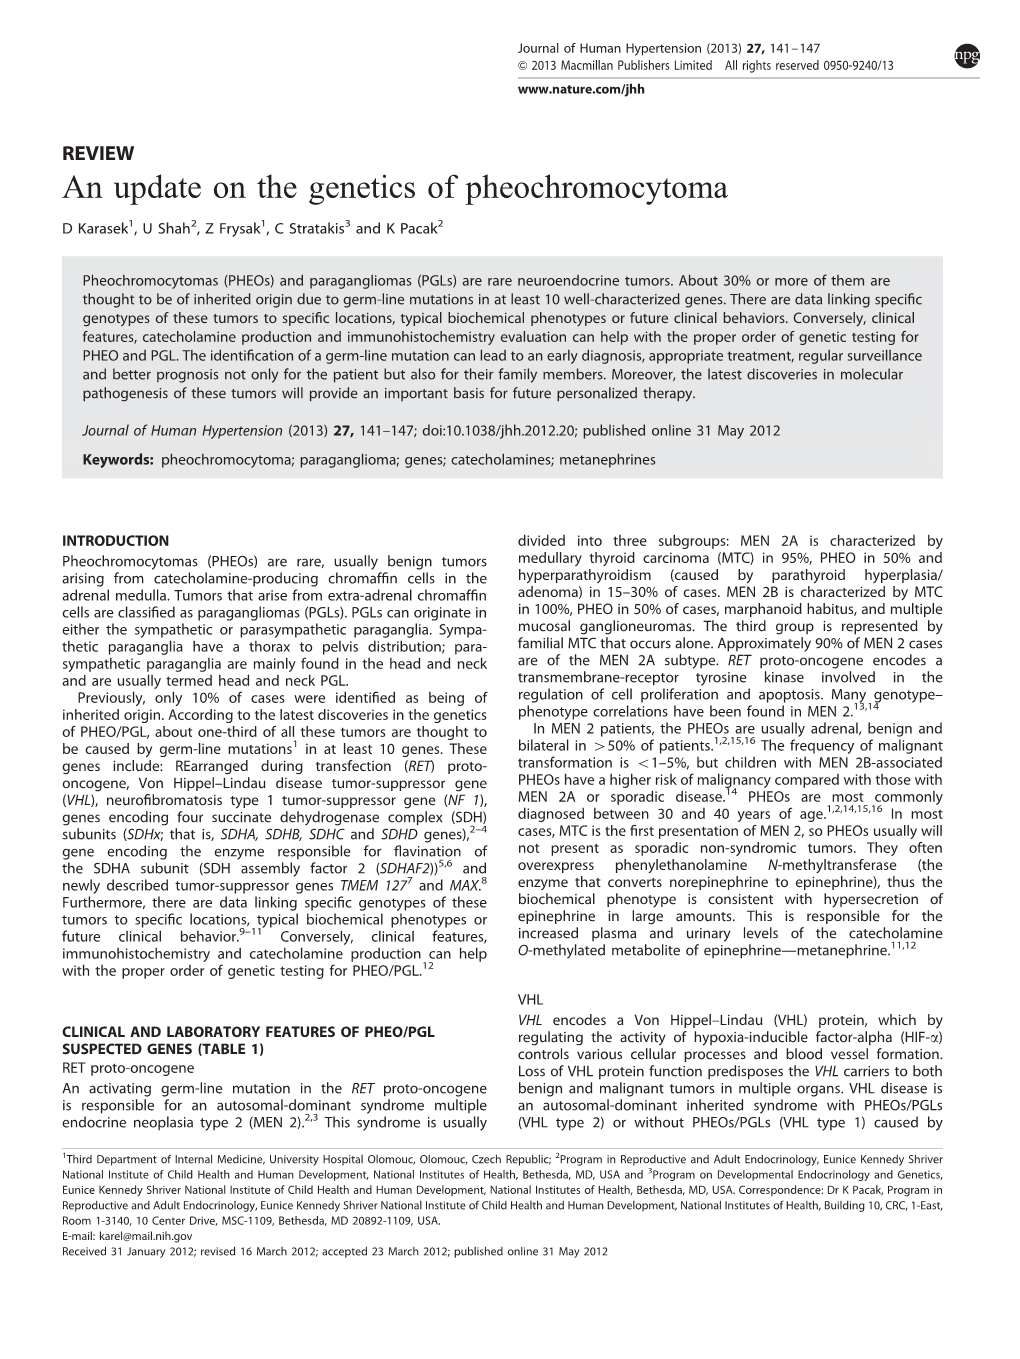 An Update on the Genetics of Pheochromocytoma